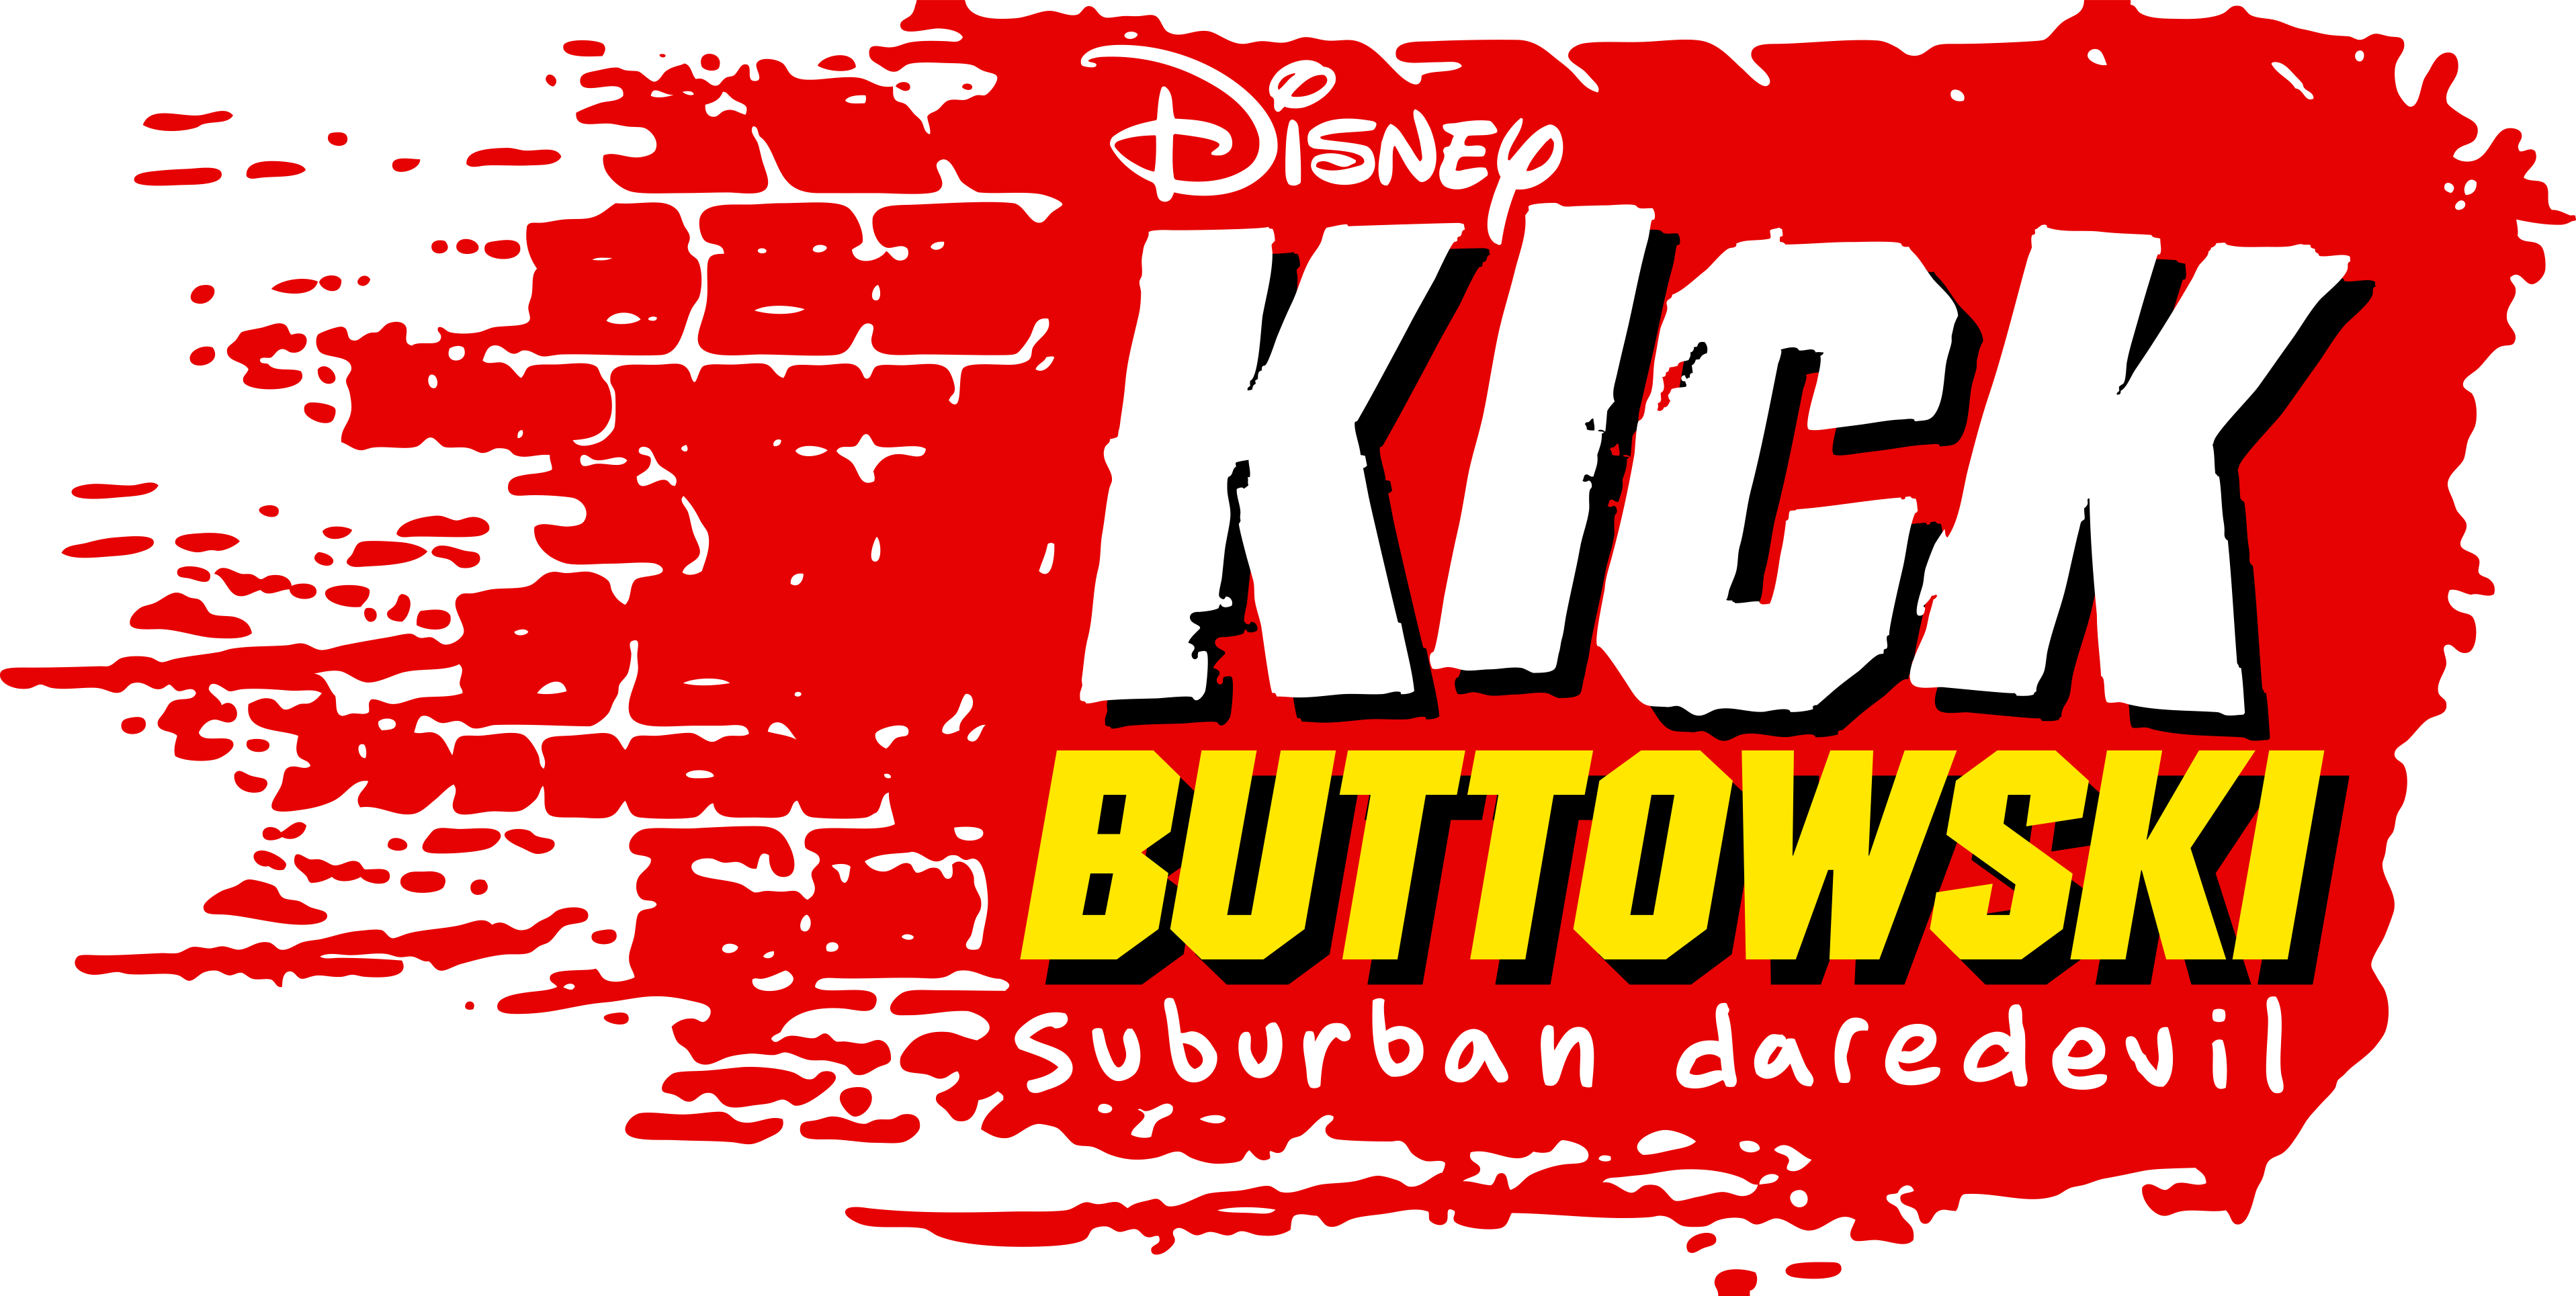 Kick buttowski logo